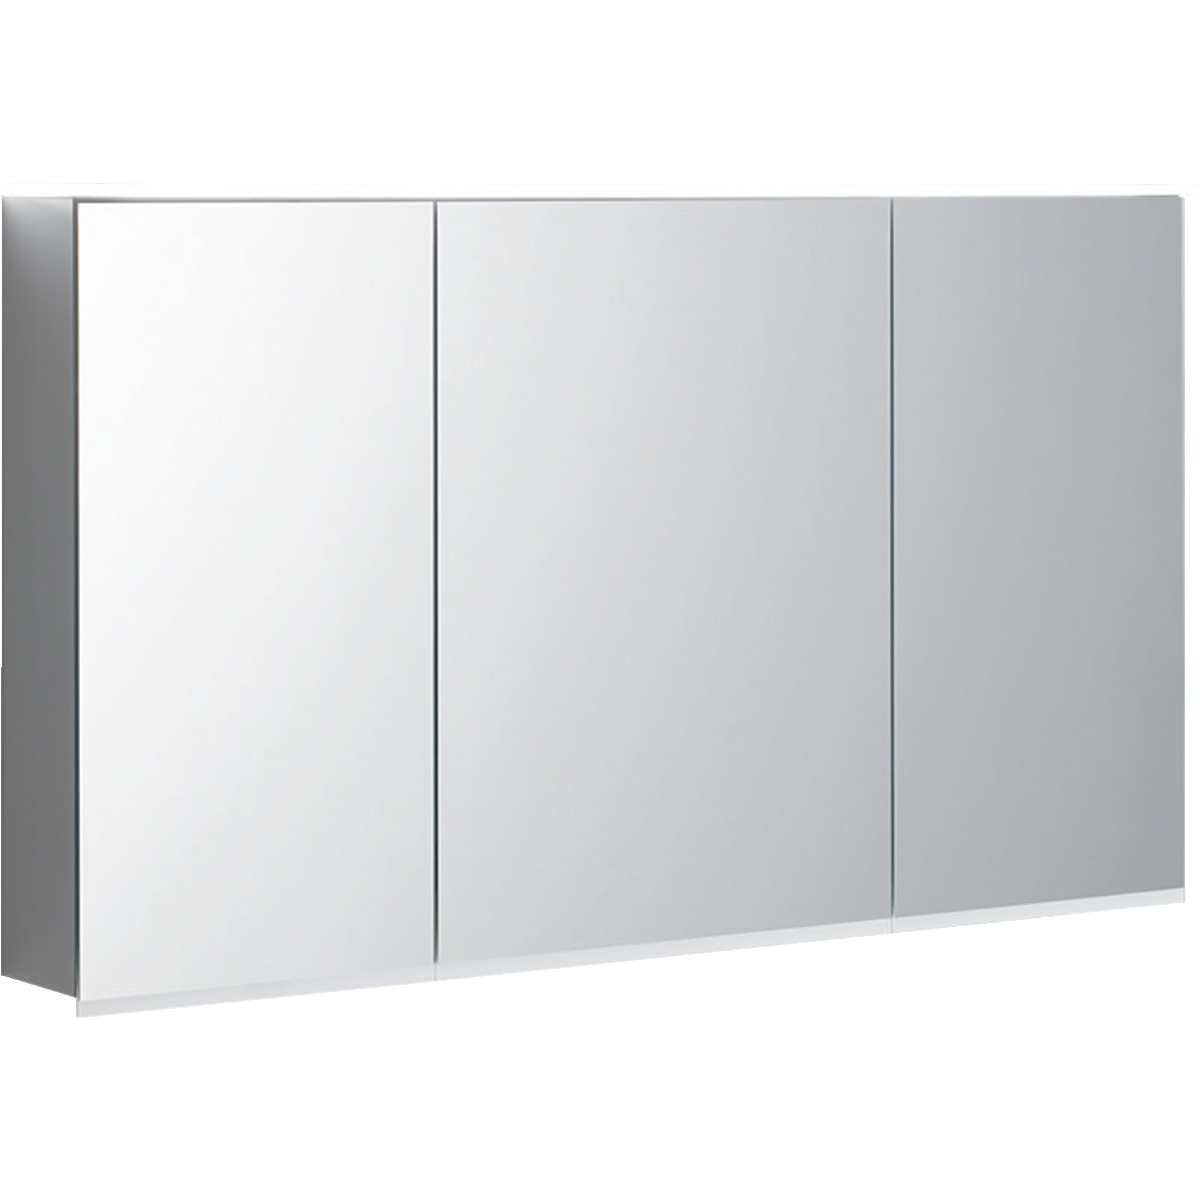 Option Plus Mirror Cabinet With Lighting 3 Doors - 1200mm